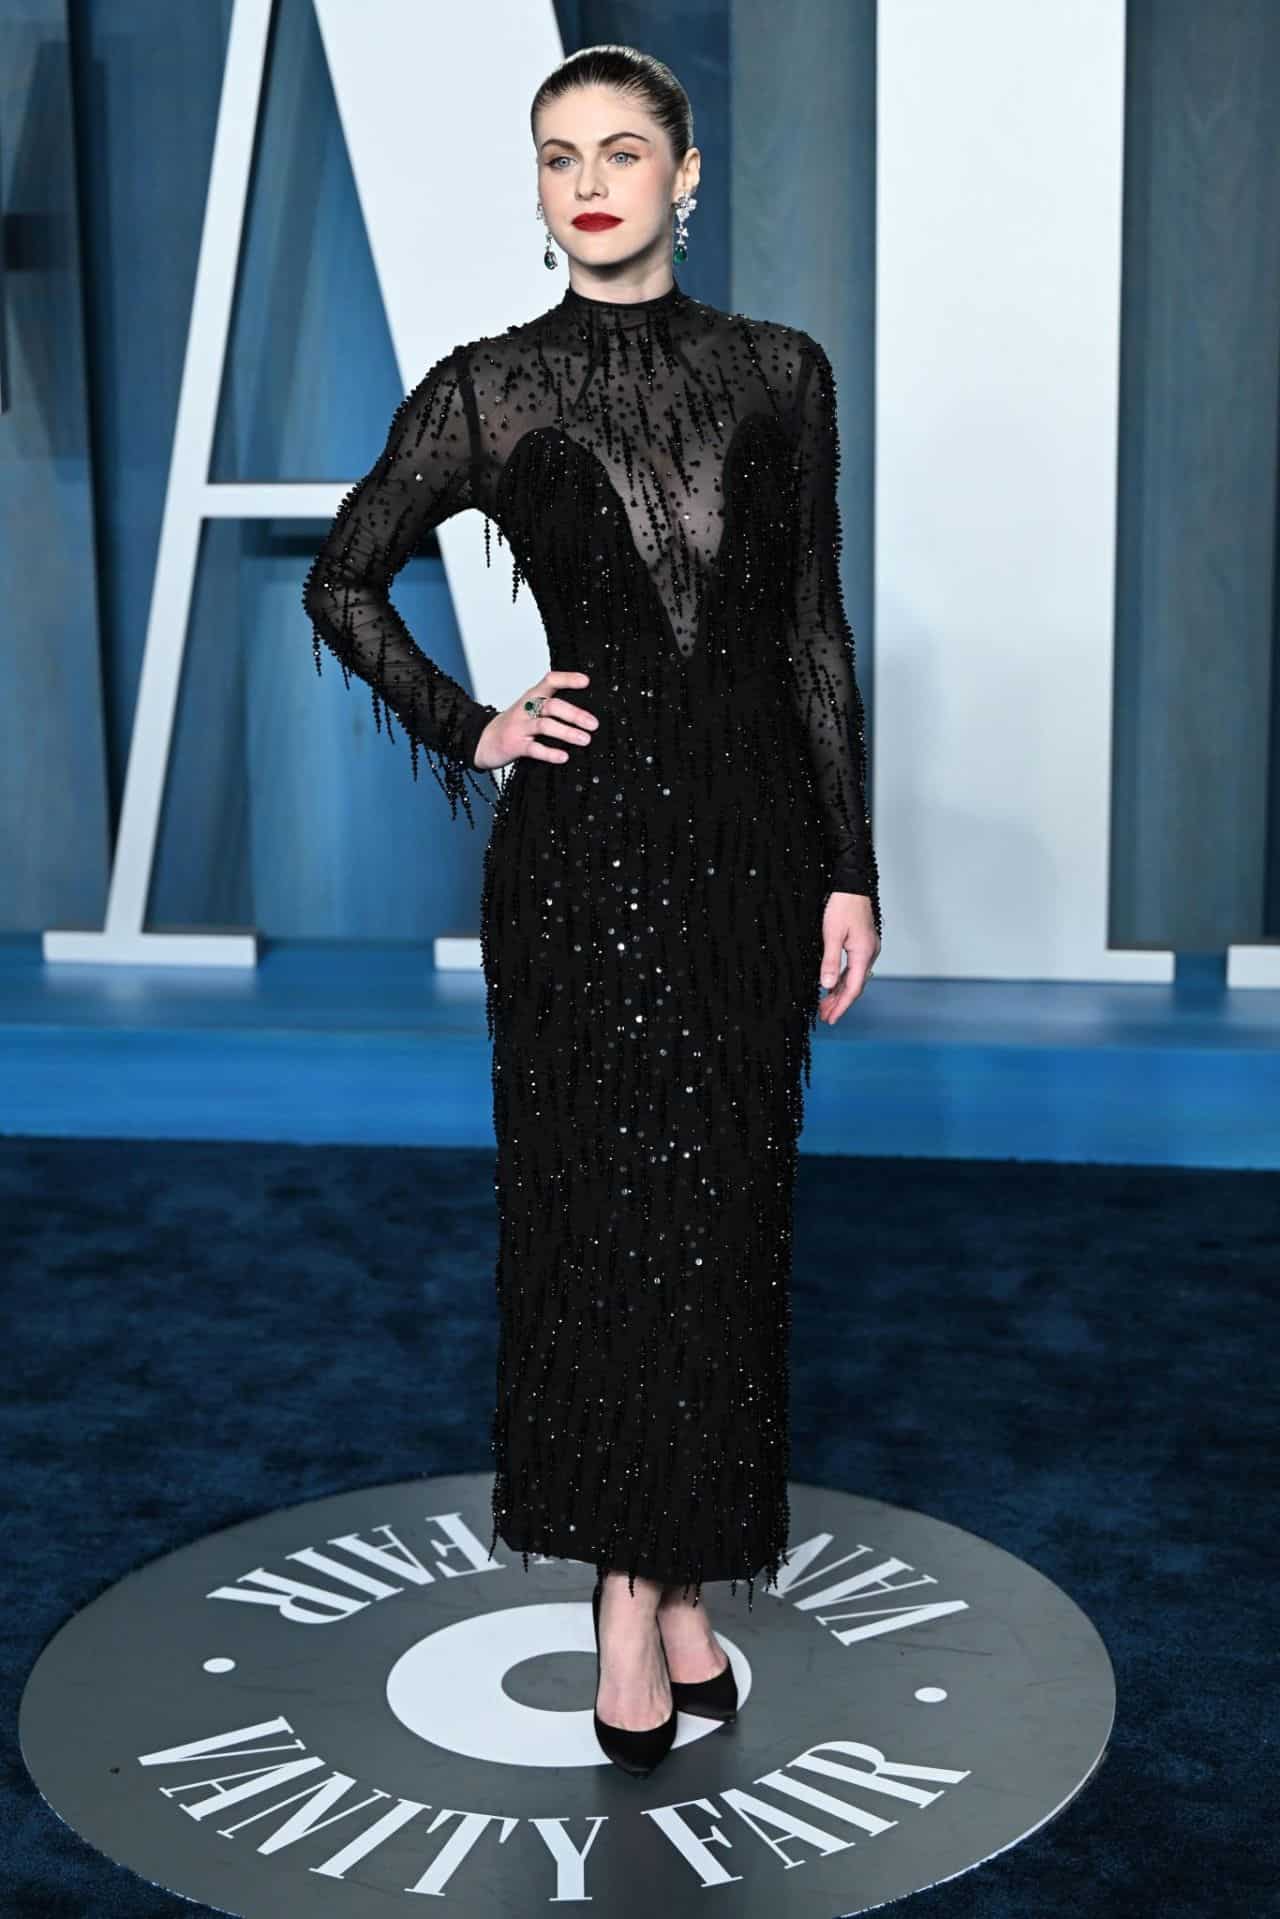 Alexandra Daddario Shines in a Sheer Dress at 2022 Vanity Fair Oscar Party